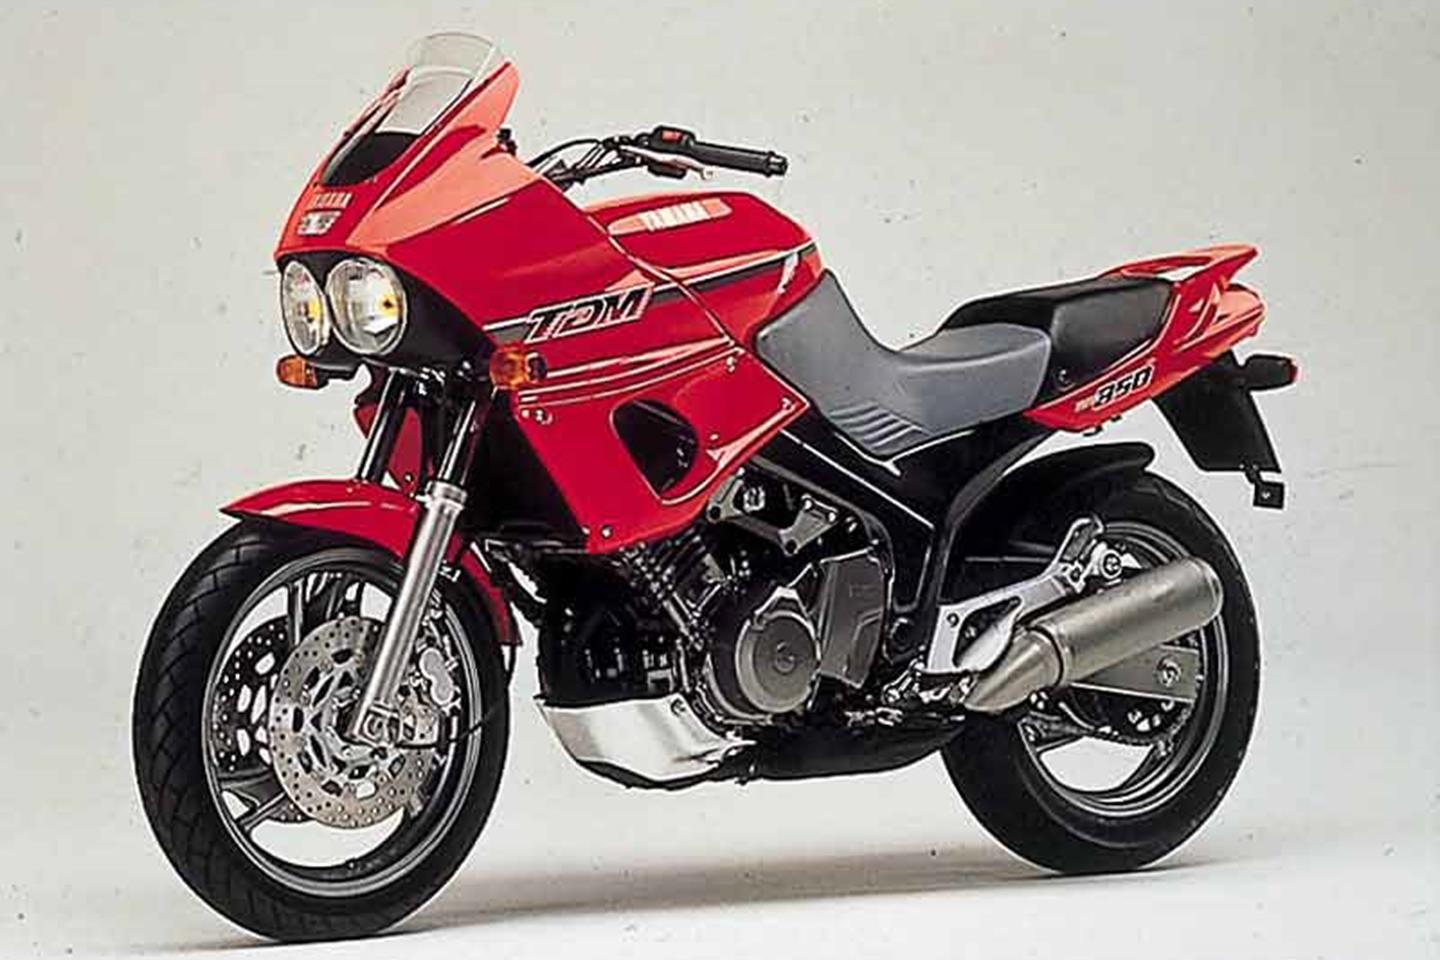 Yamaha TDM 850 (1991-2001) Review | Speed